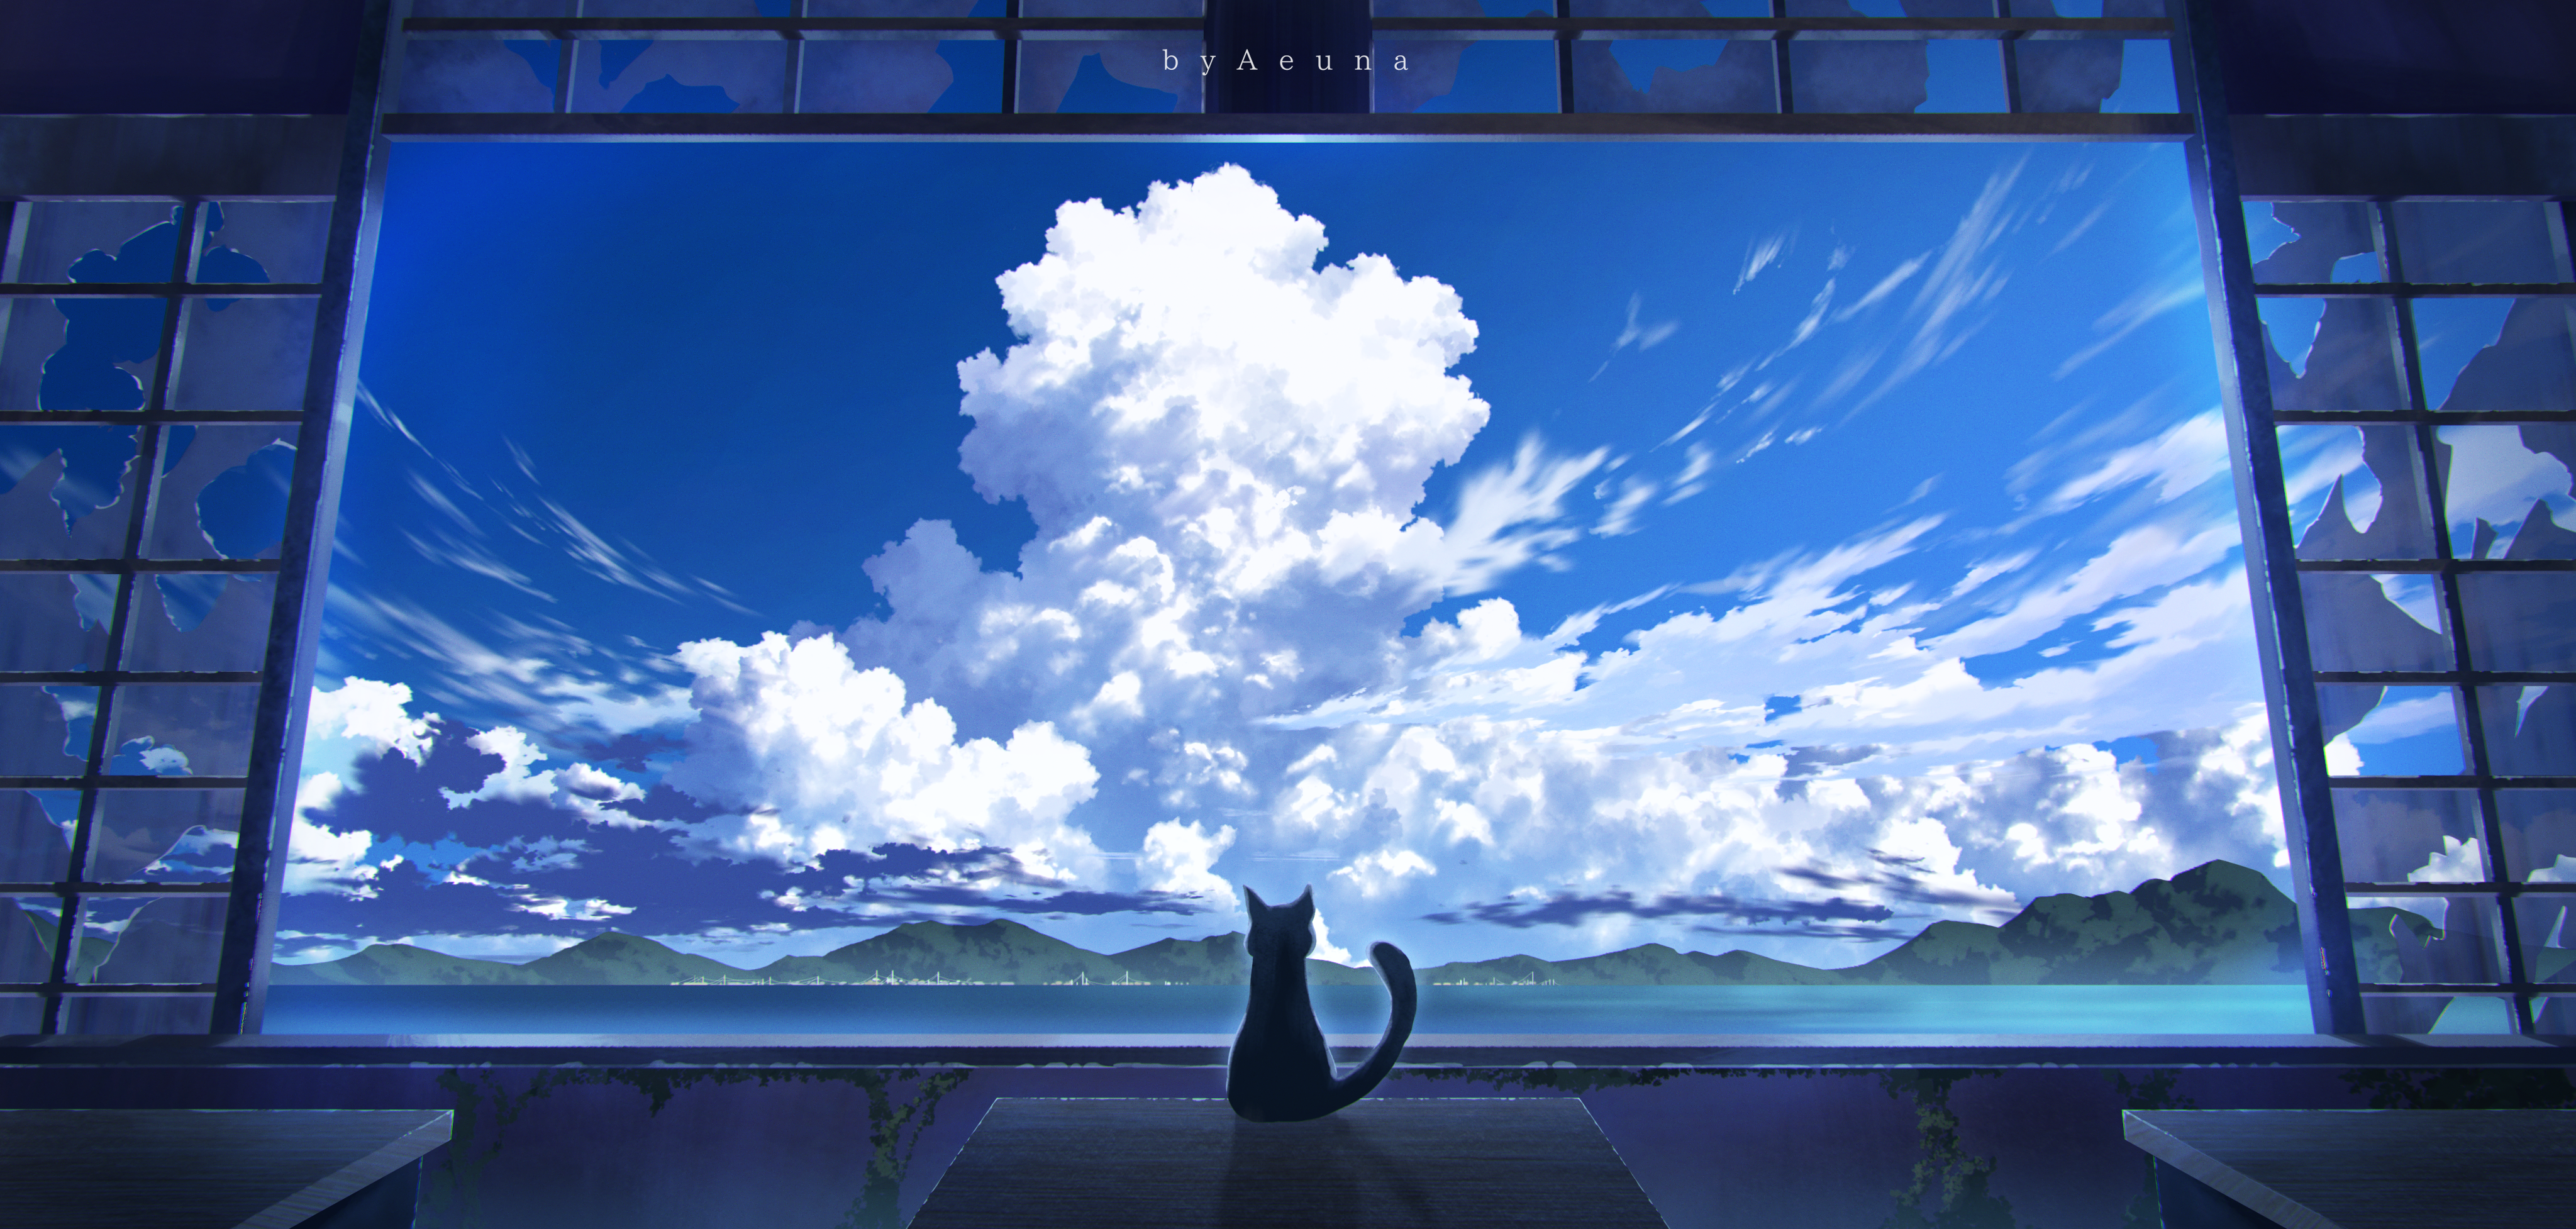 General 4096x1954 digital art artwork illustration window cats animals landscape clouds sea water mountains sky